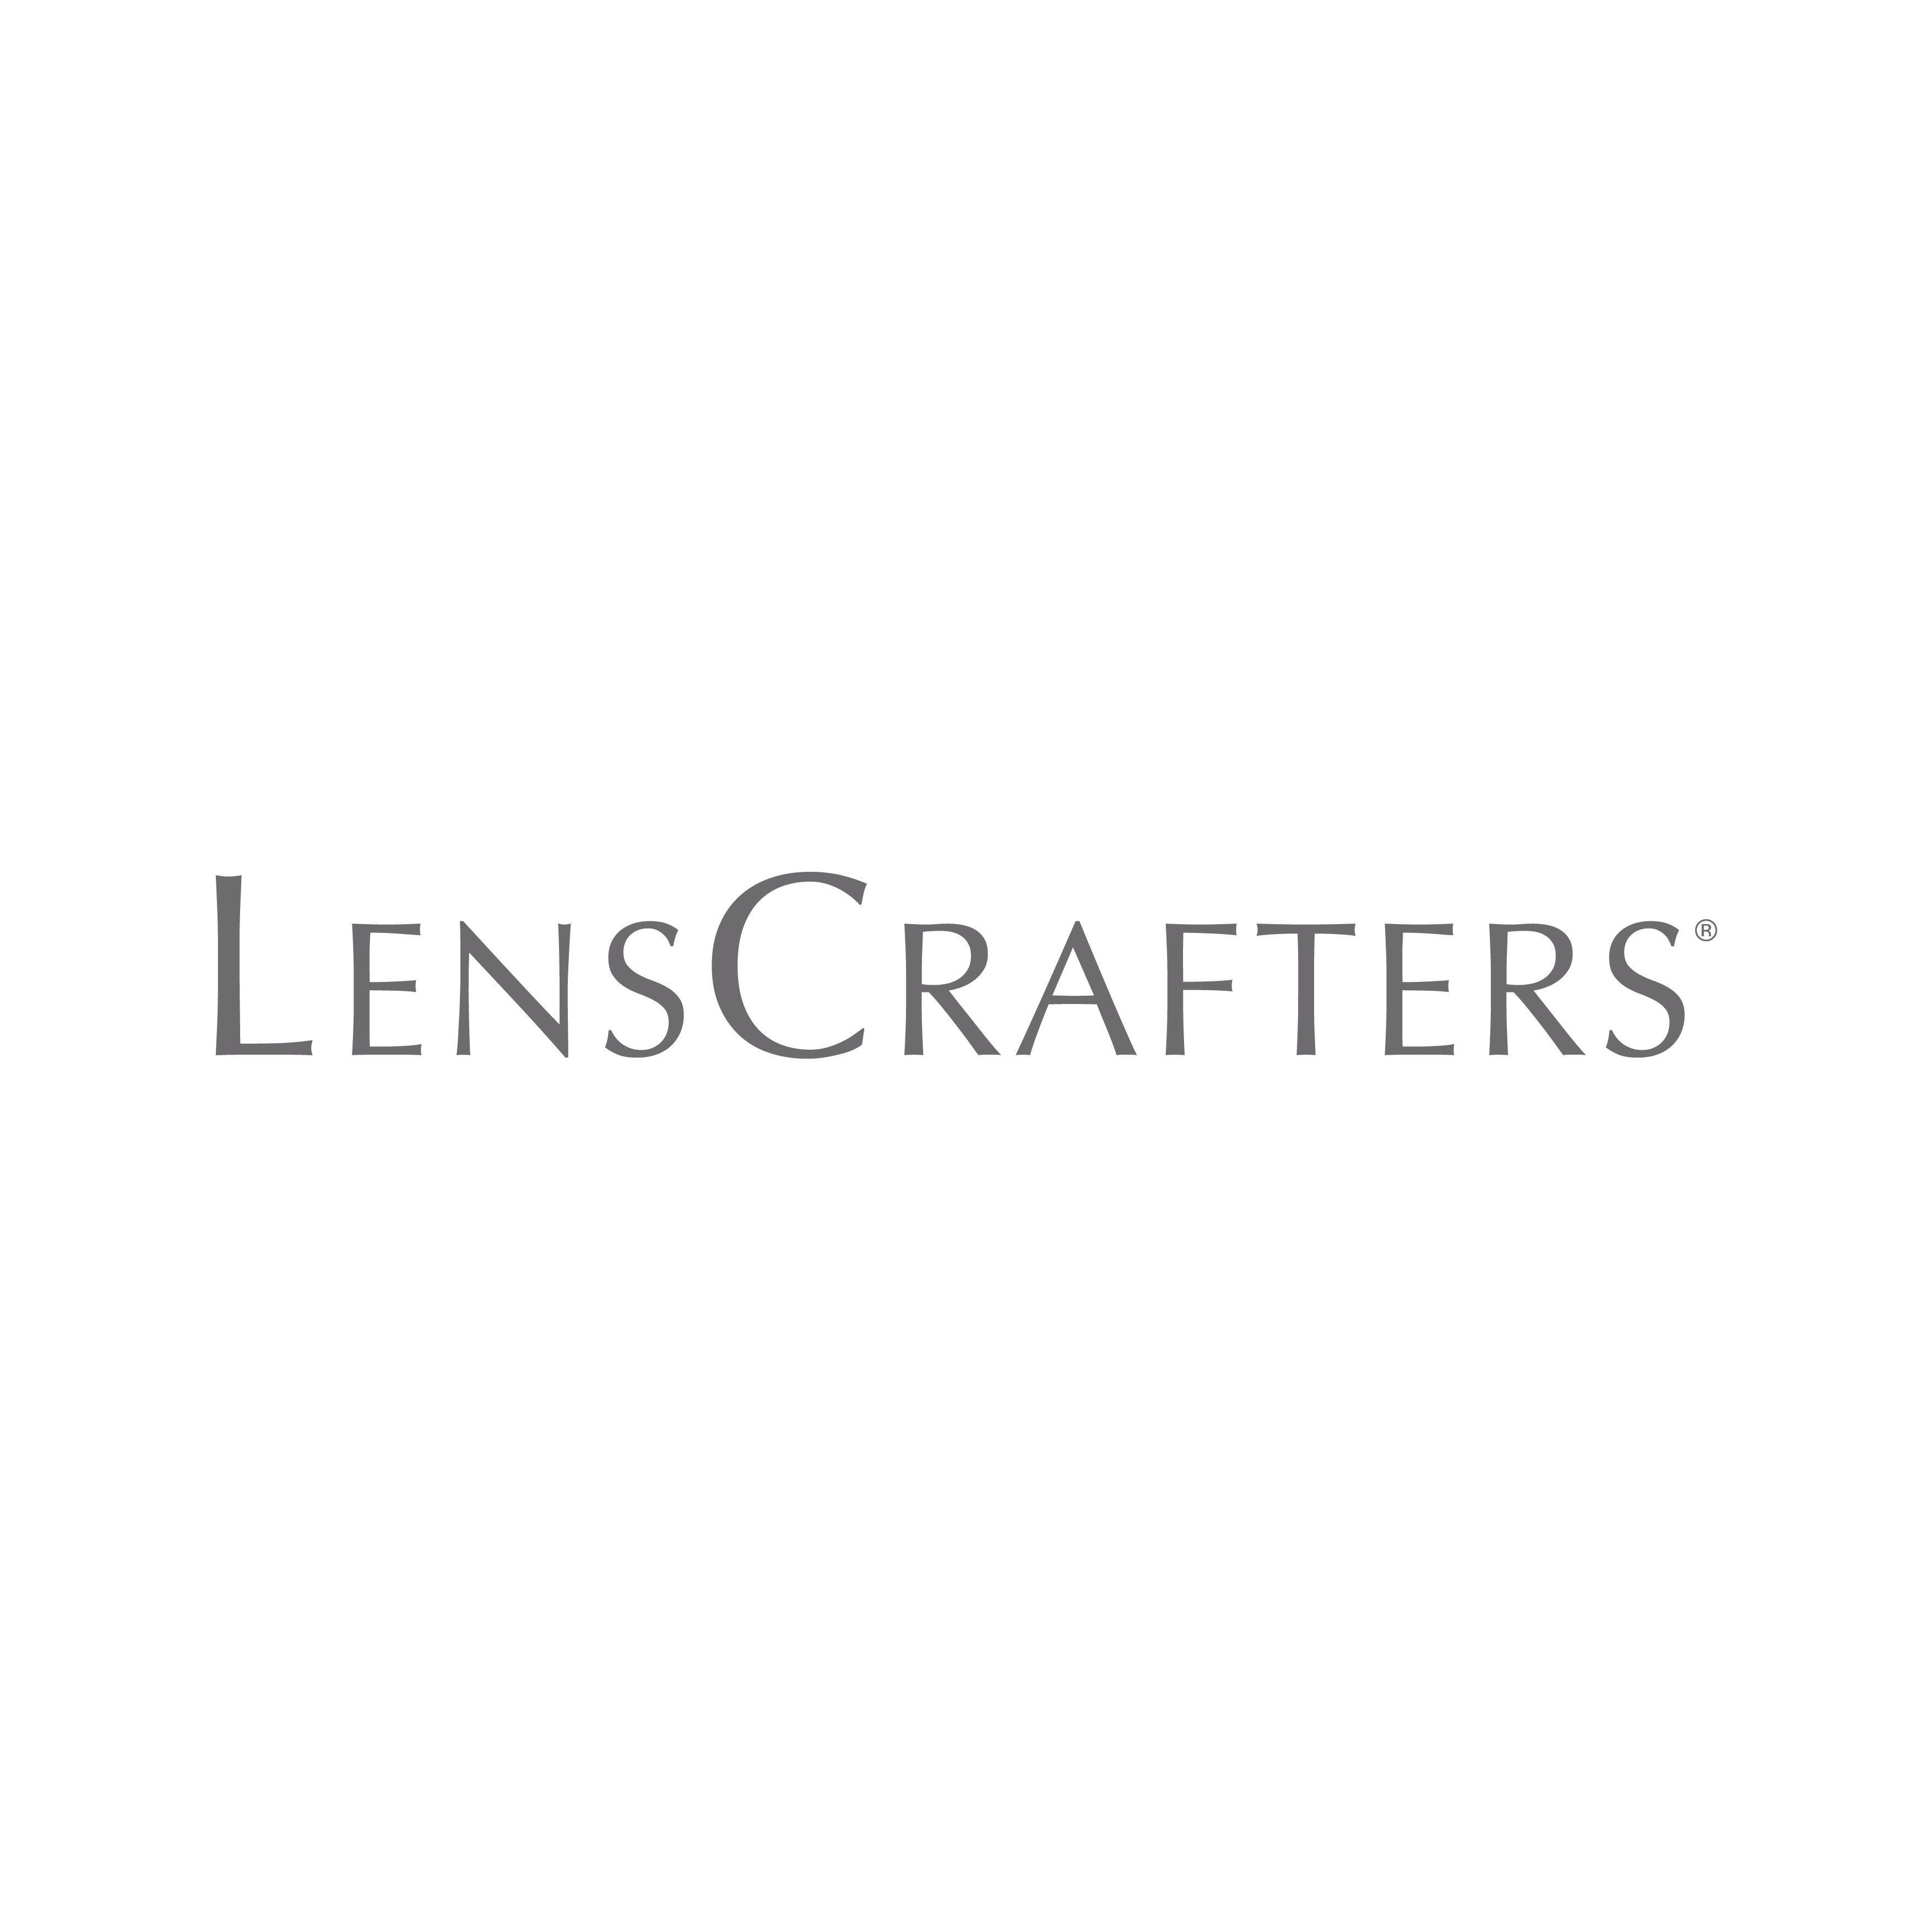 lens crafters billings mt